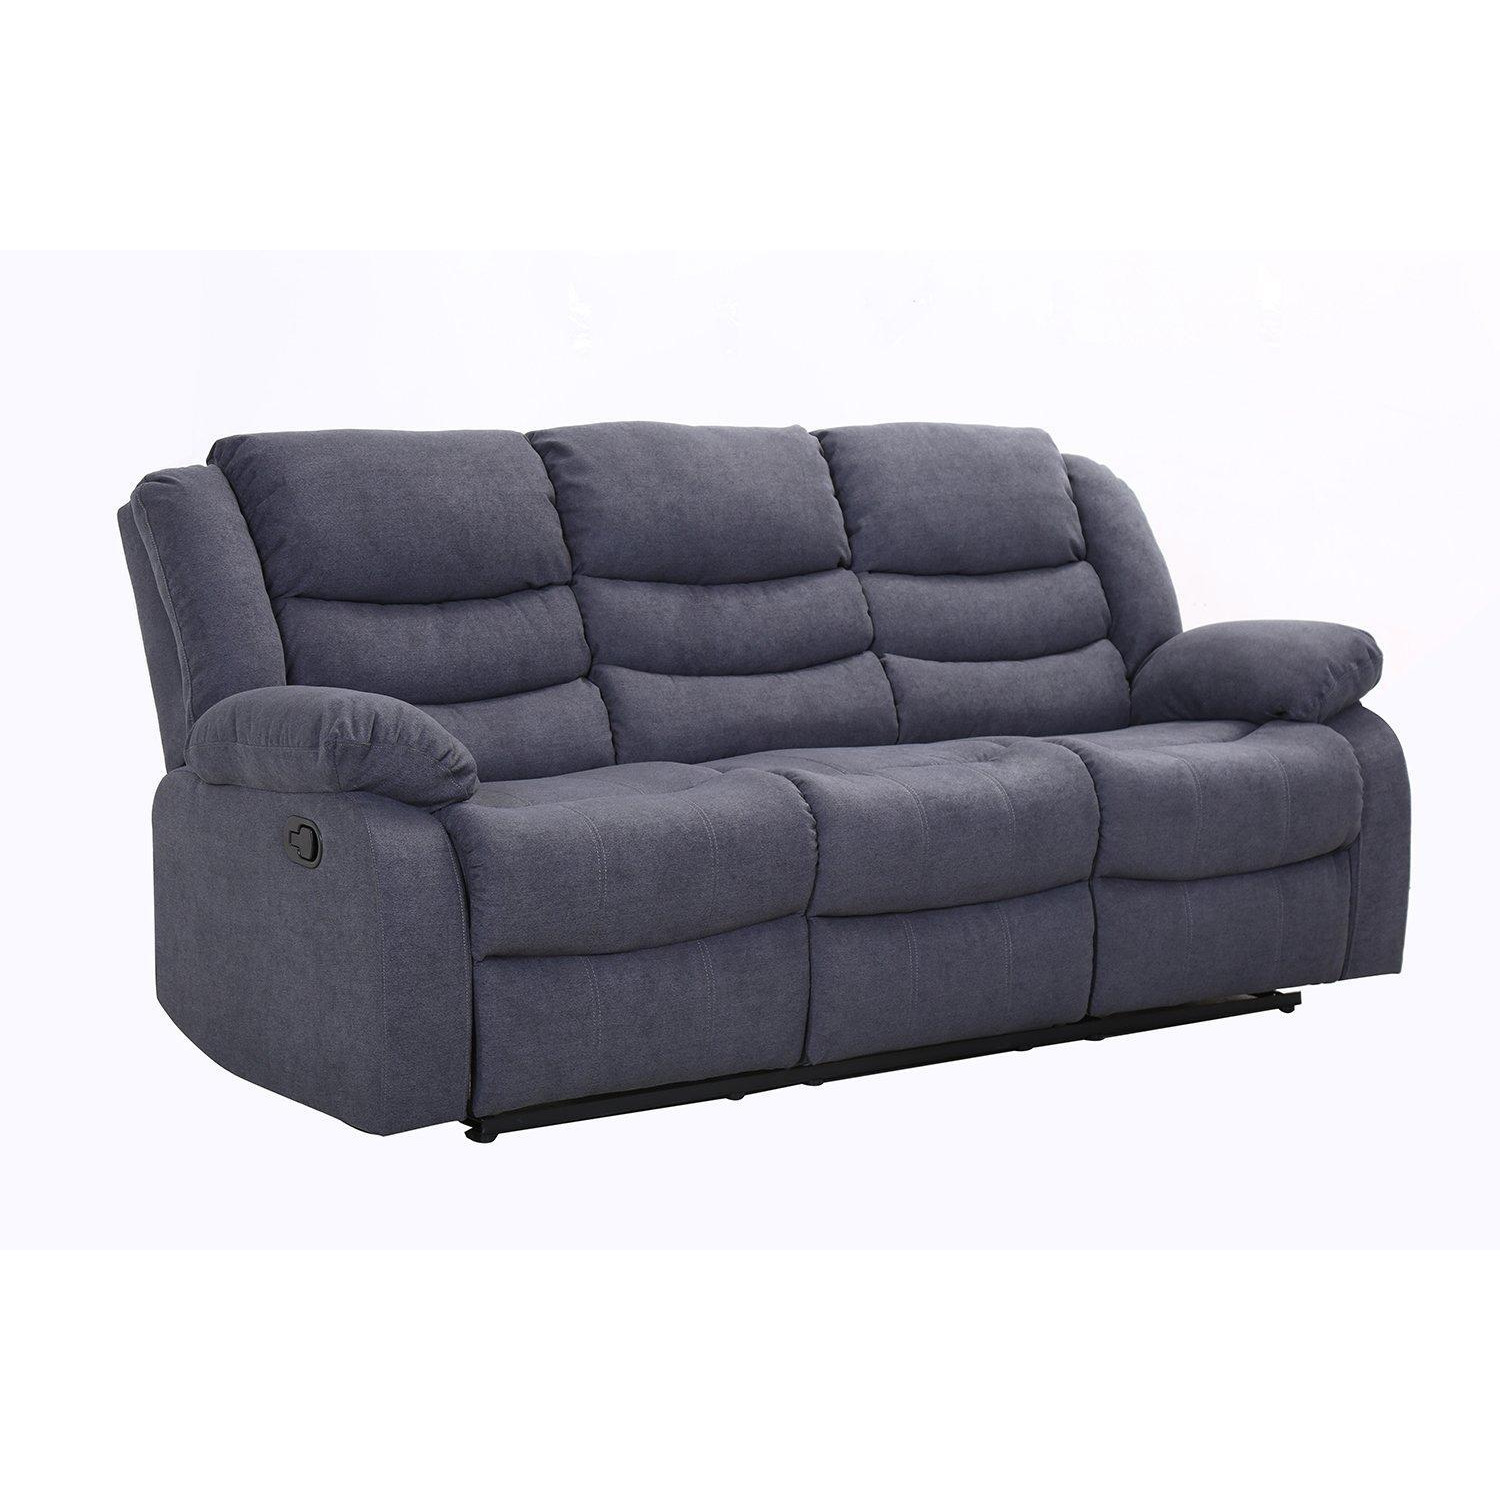 Revere 3 Seater Grey Fabric Recliner Sofa - image 1